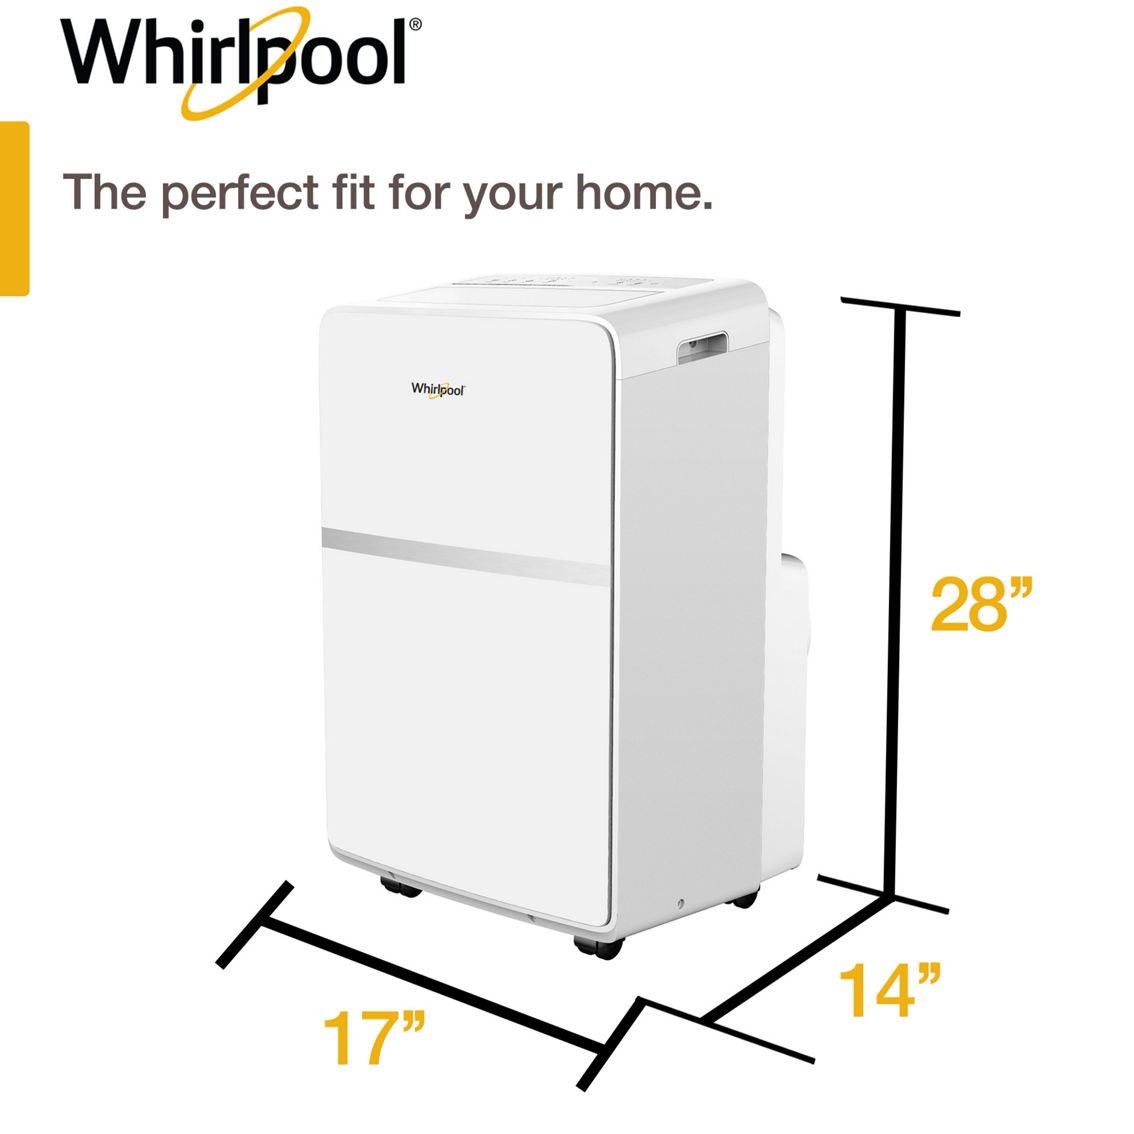 Whirlpool 6500 BTU Portable Air Conditioner - Image 2 of 5